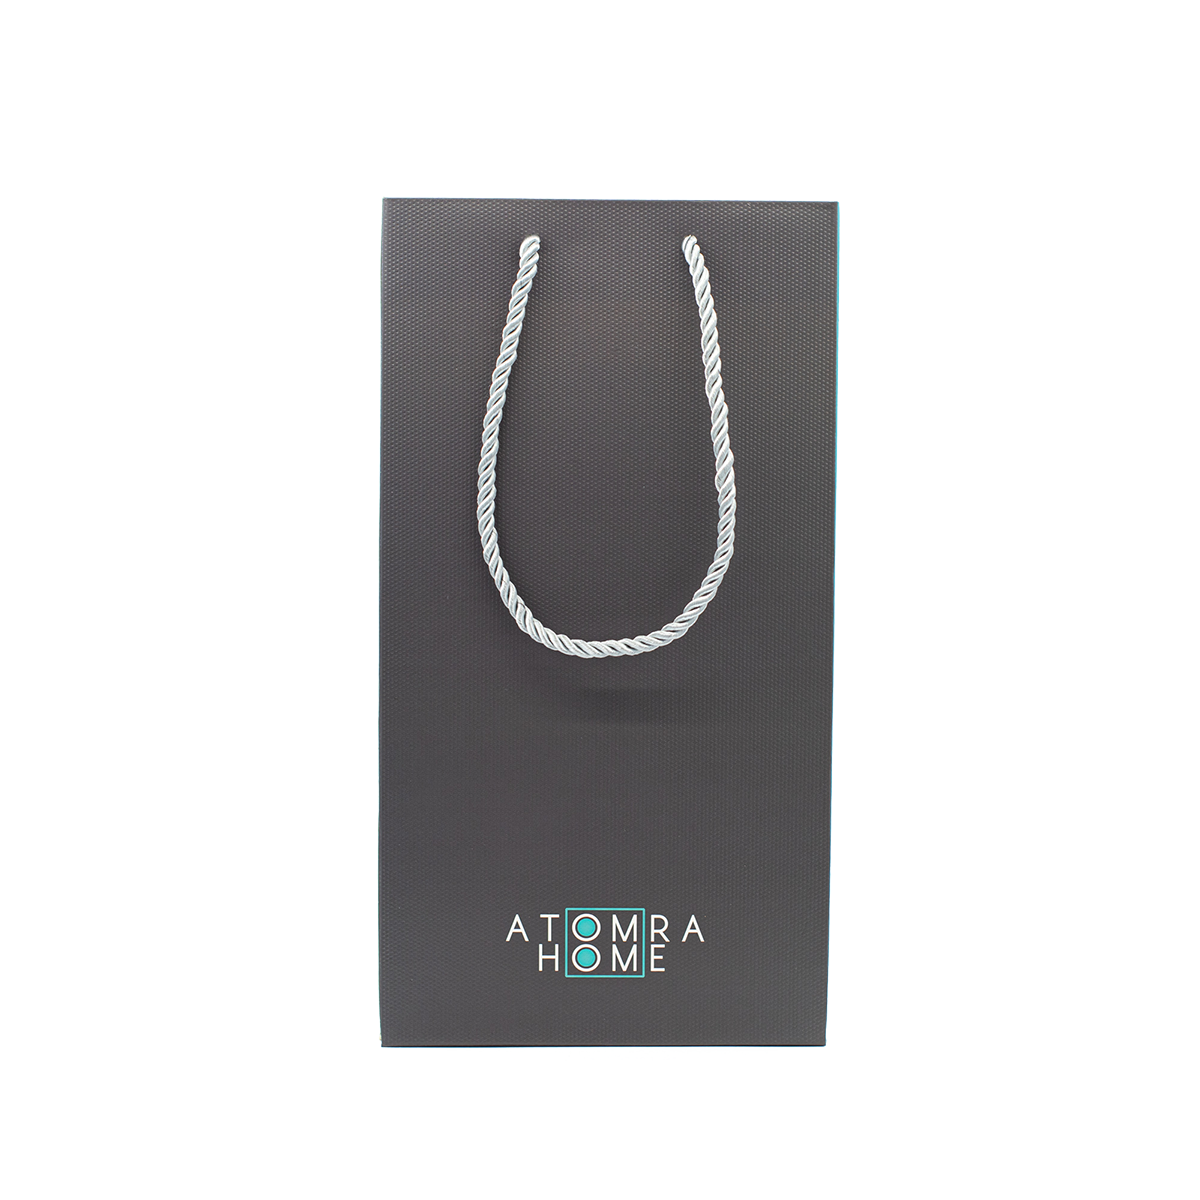 Atomra Home gift bag, present bag, grey and mint blue bag with Atomra Home LOGO